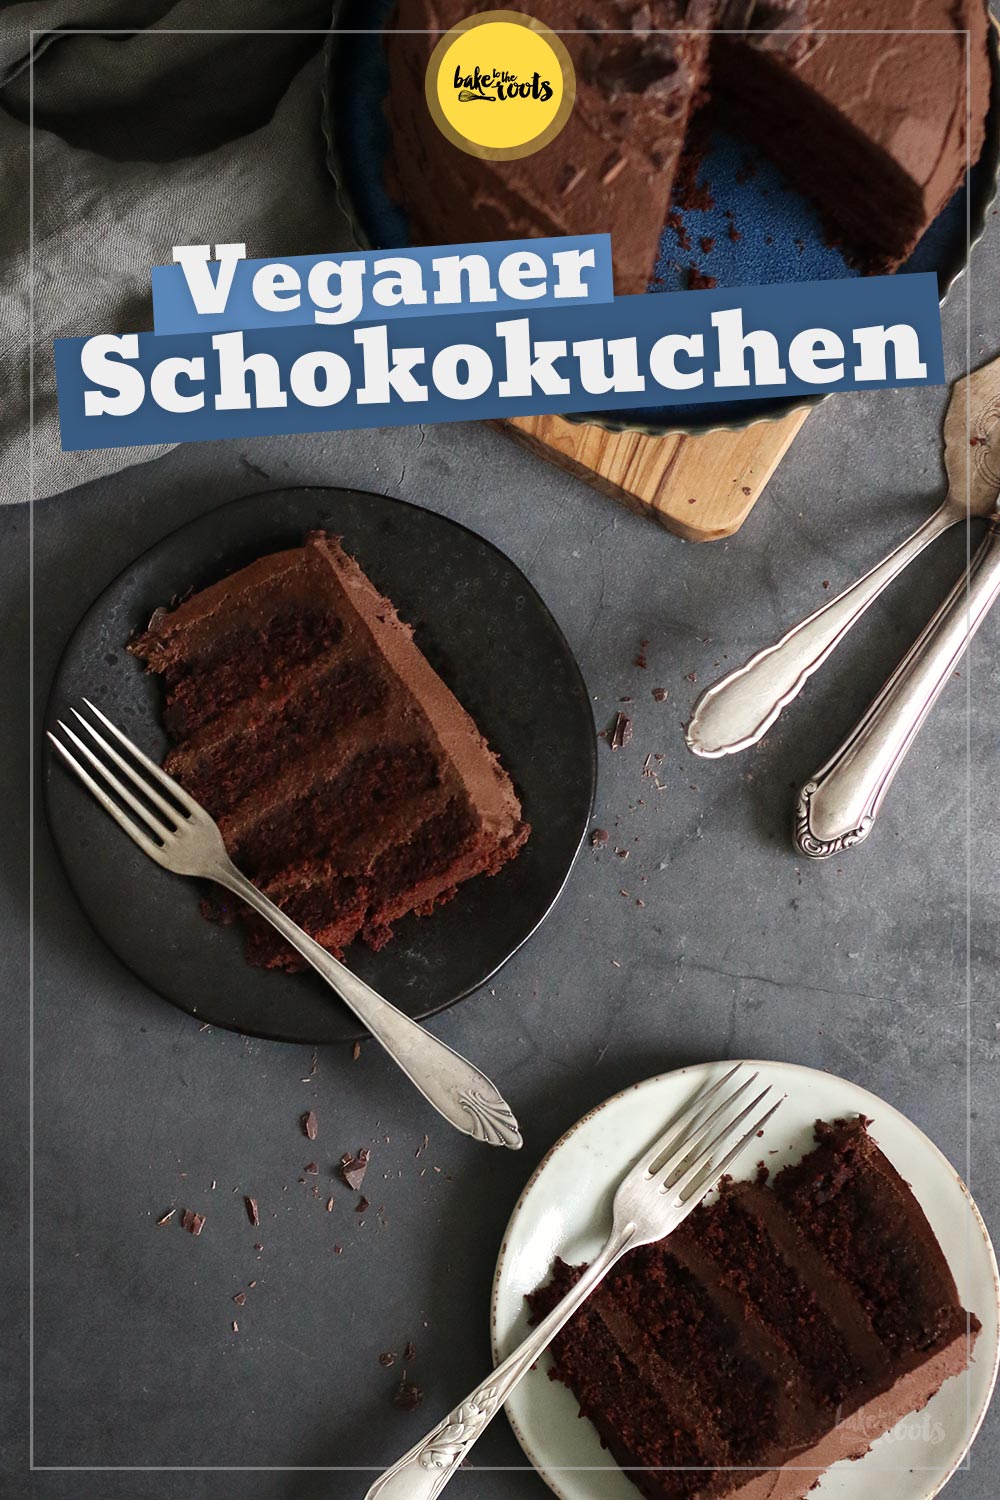 Veganer Schokokuchen | Bake to the roots